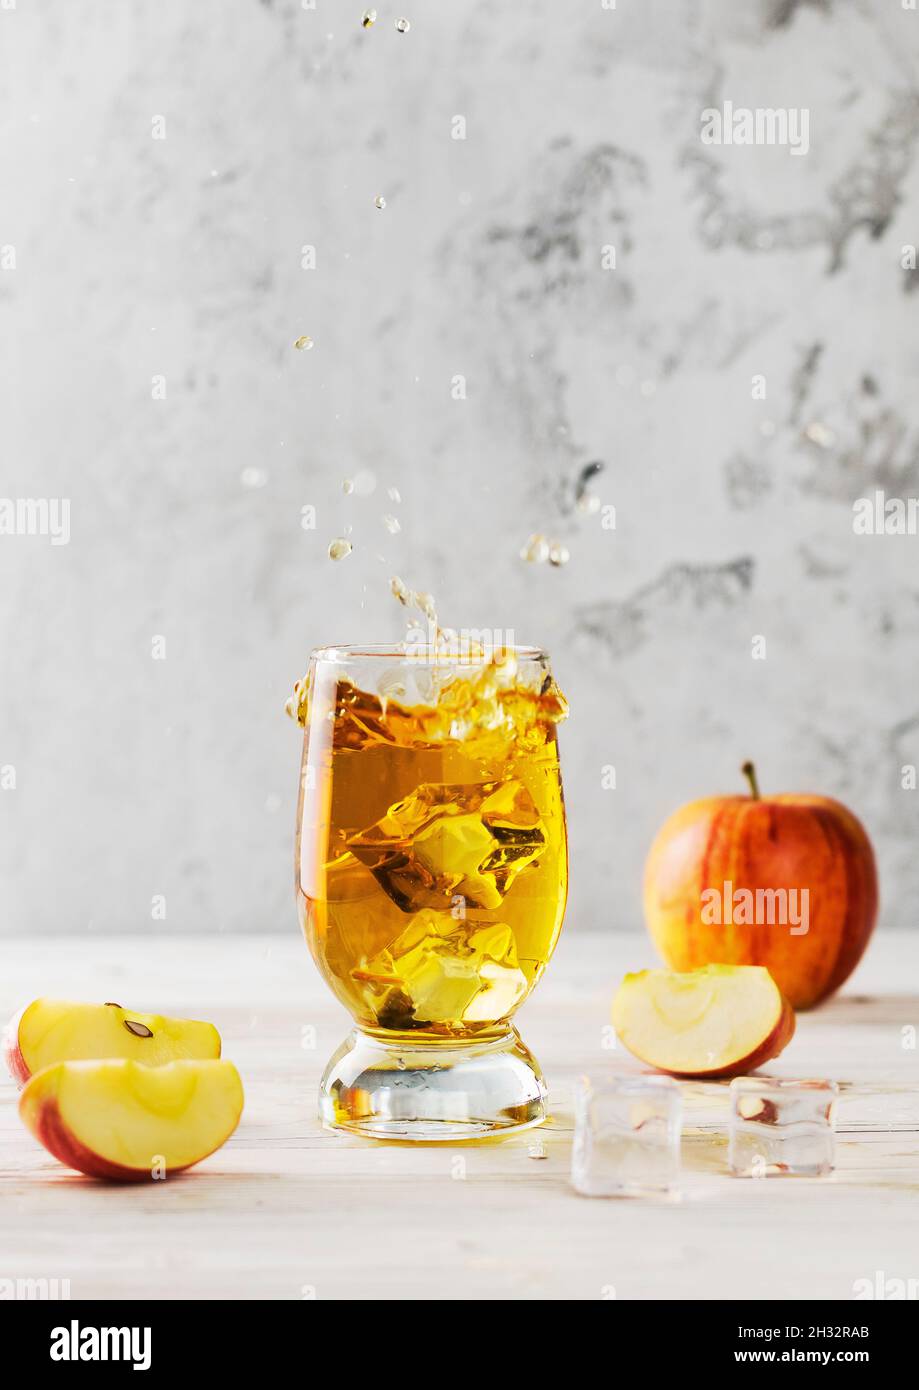 flying splashing apple juice on table Stock Photo